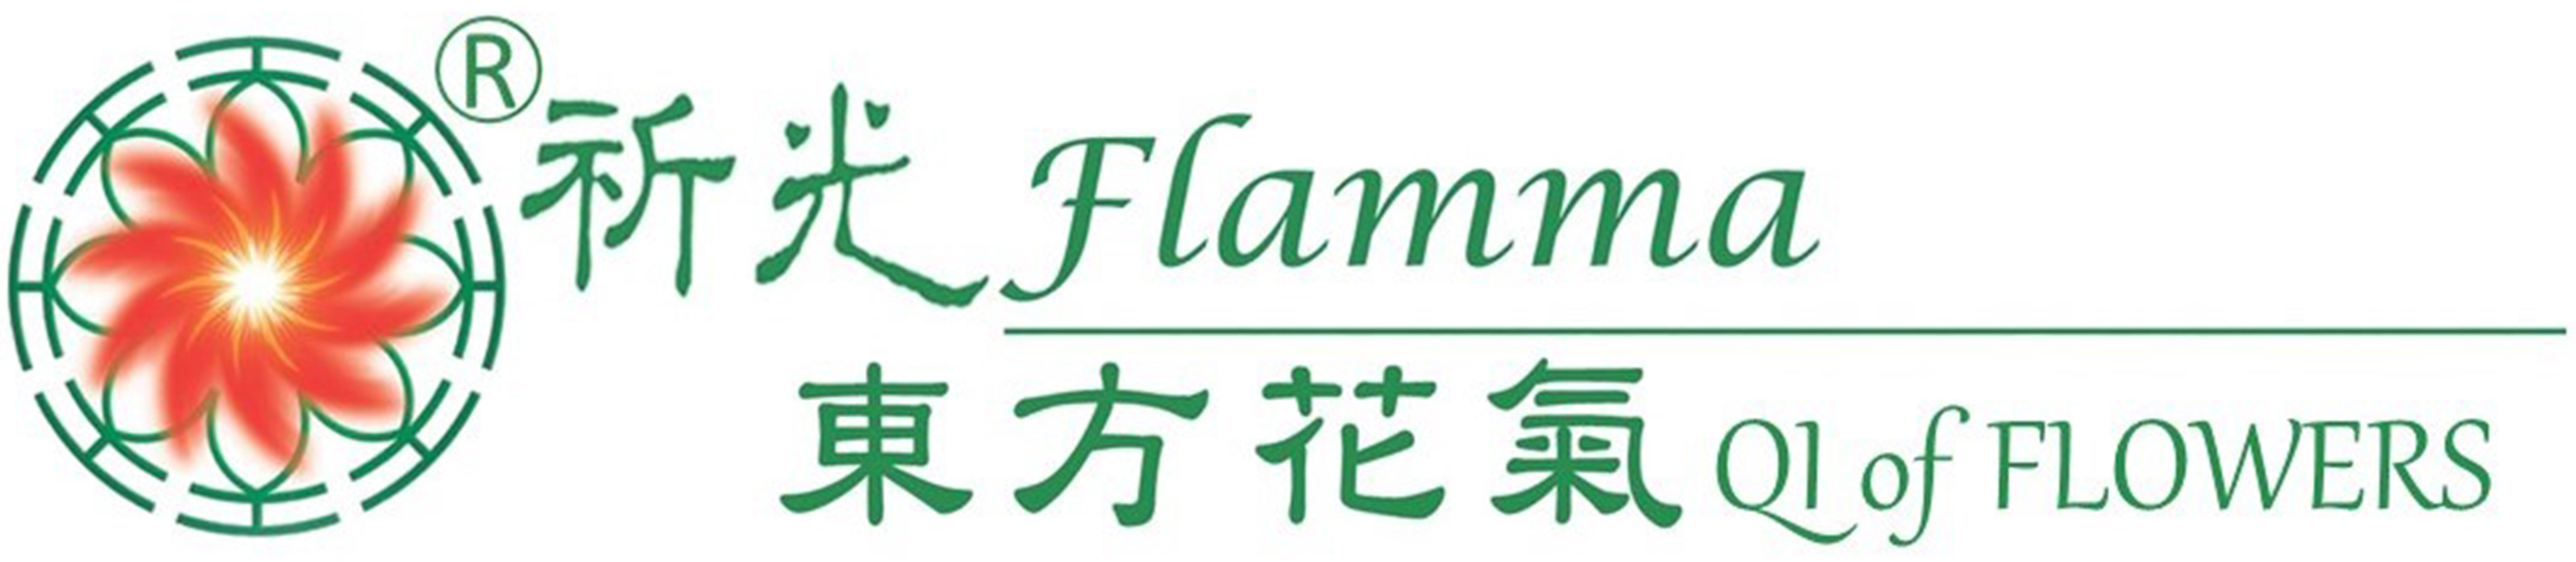 Flamma Qi of Flower